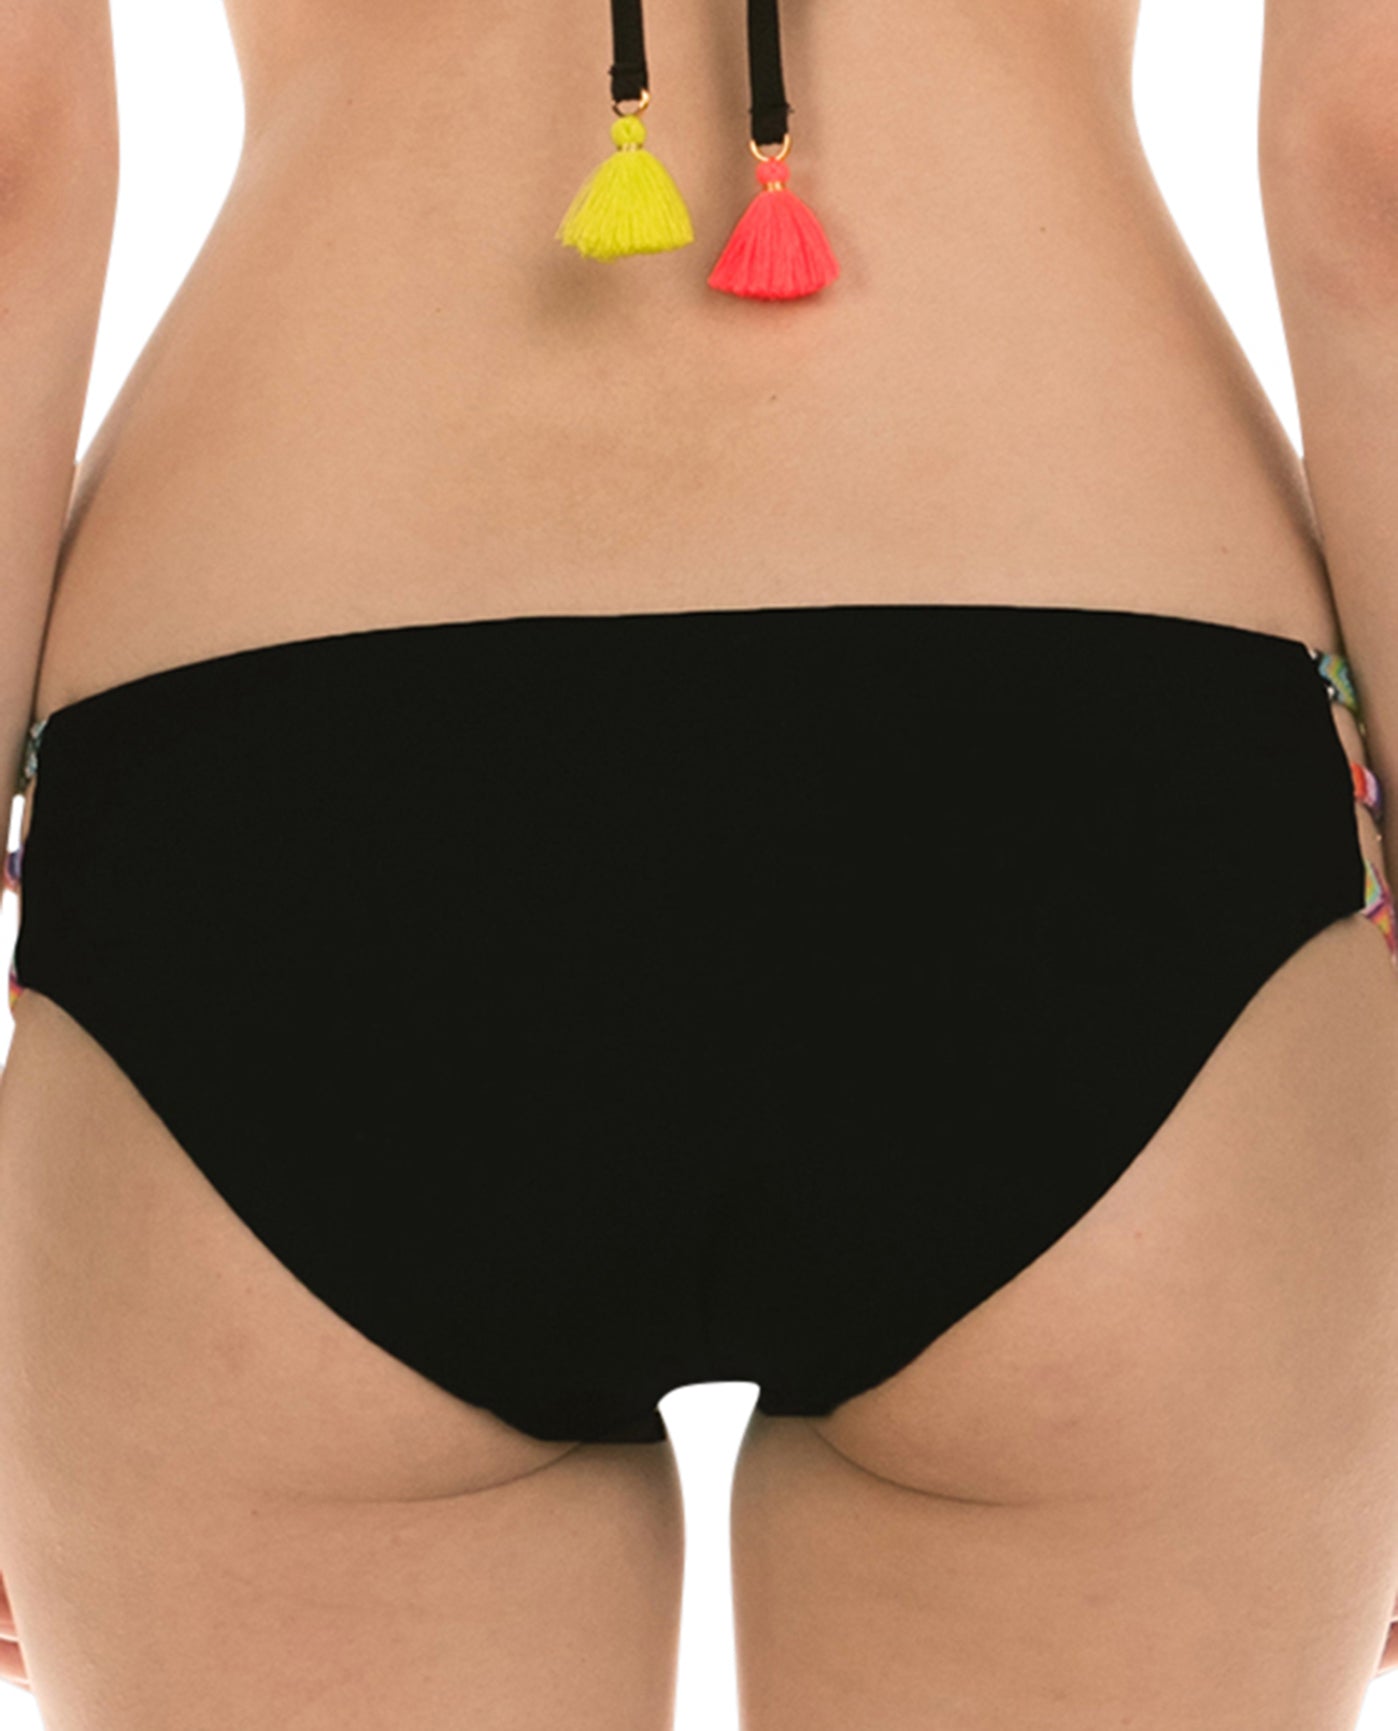 Back View Of Isabella Rose Besties Tahiti Cheeky Bikini Bottom | ISA Black